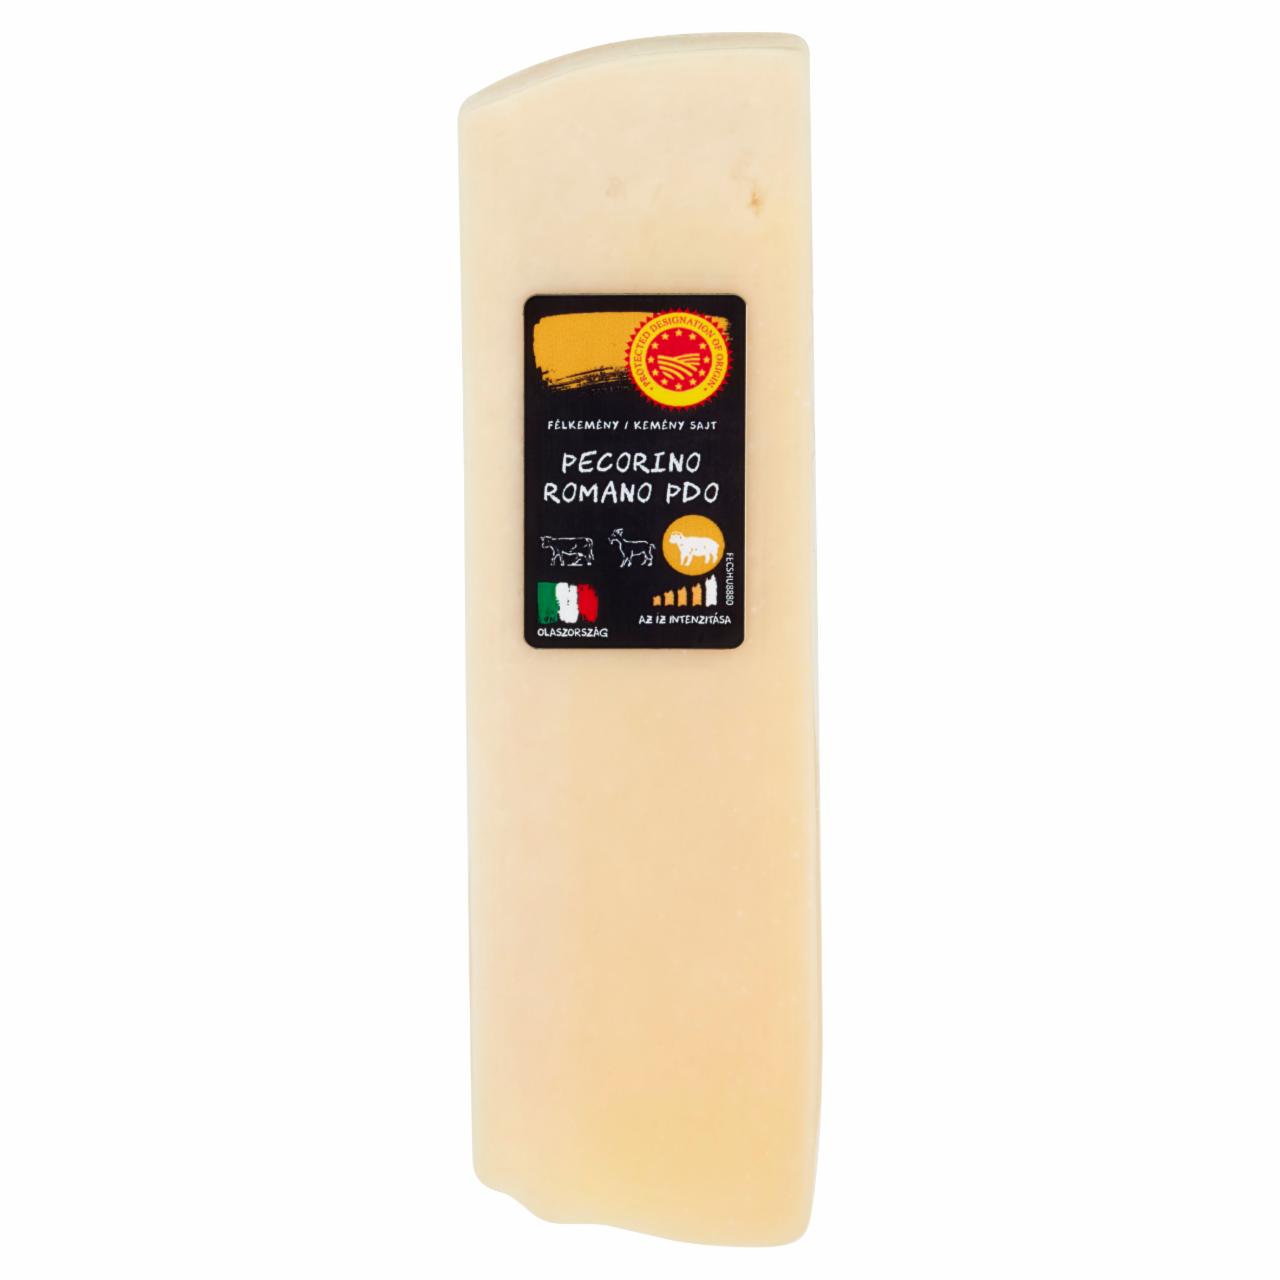 Képek - Pecorino Romano félkemény/kemény sajt